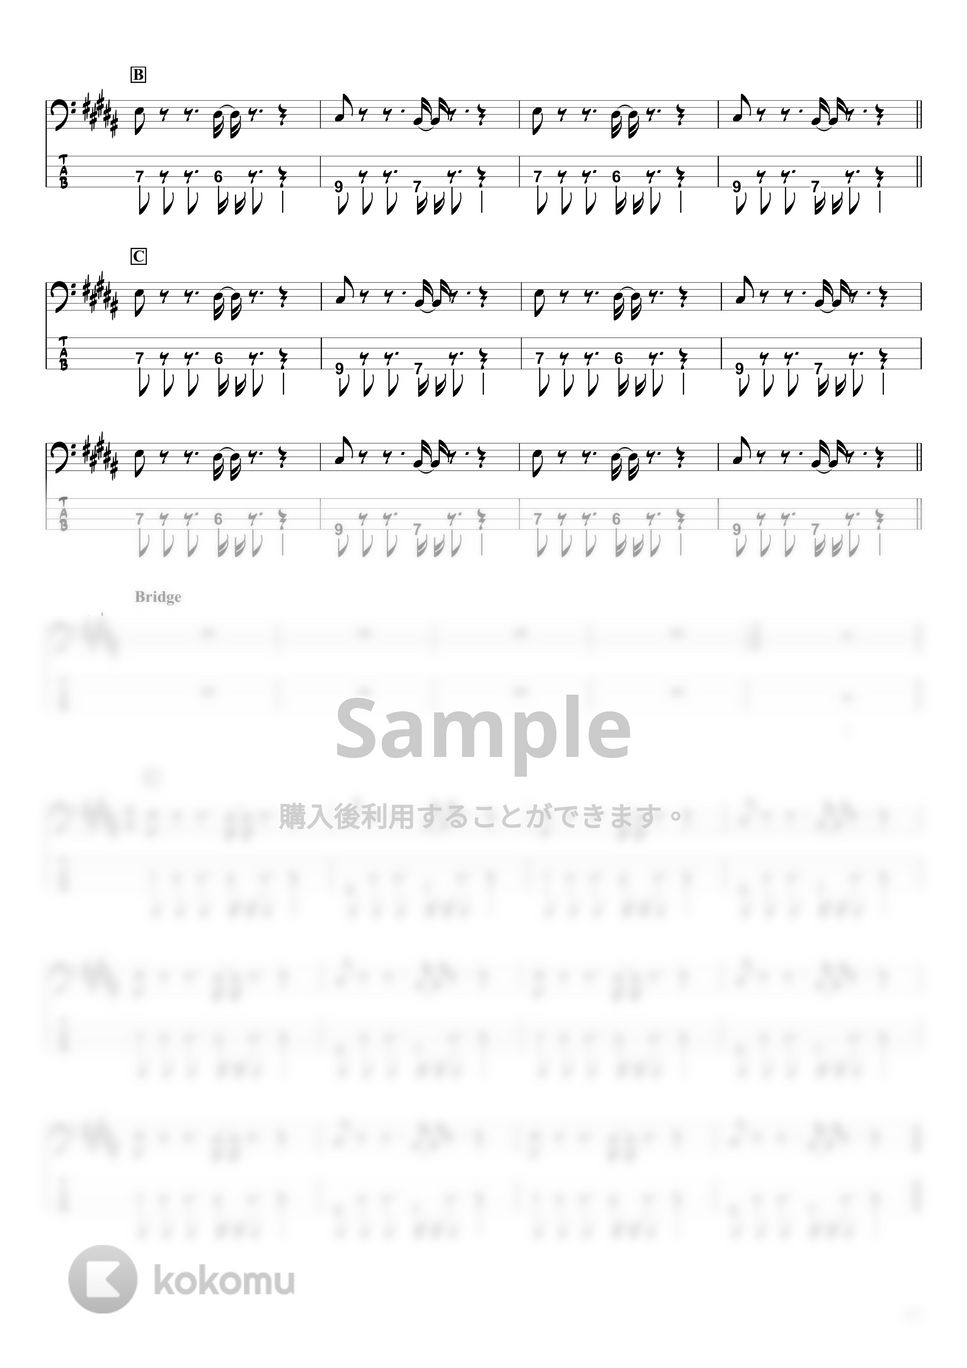 Vaundy - napori (ベースTAB譜 / ☆4弦ベース対応) by swbass